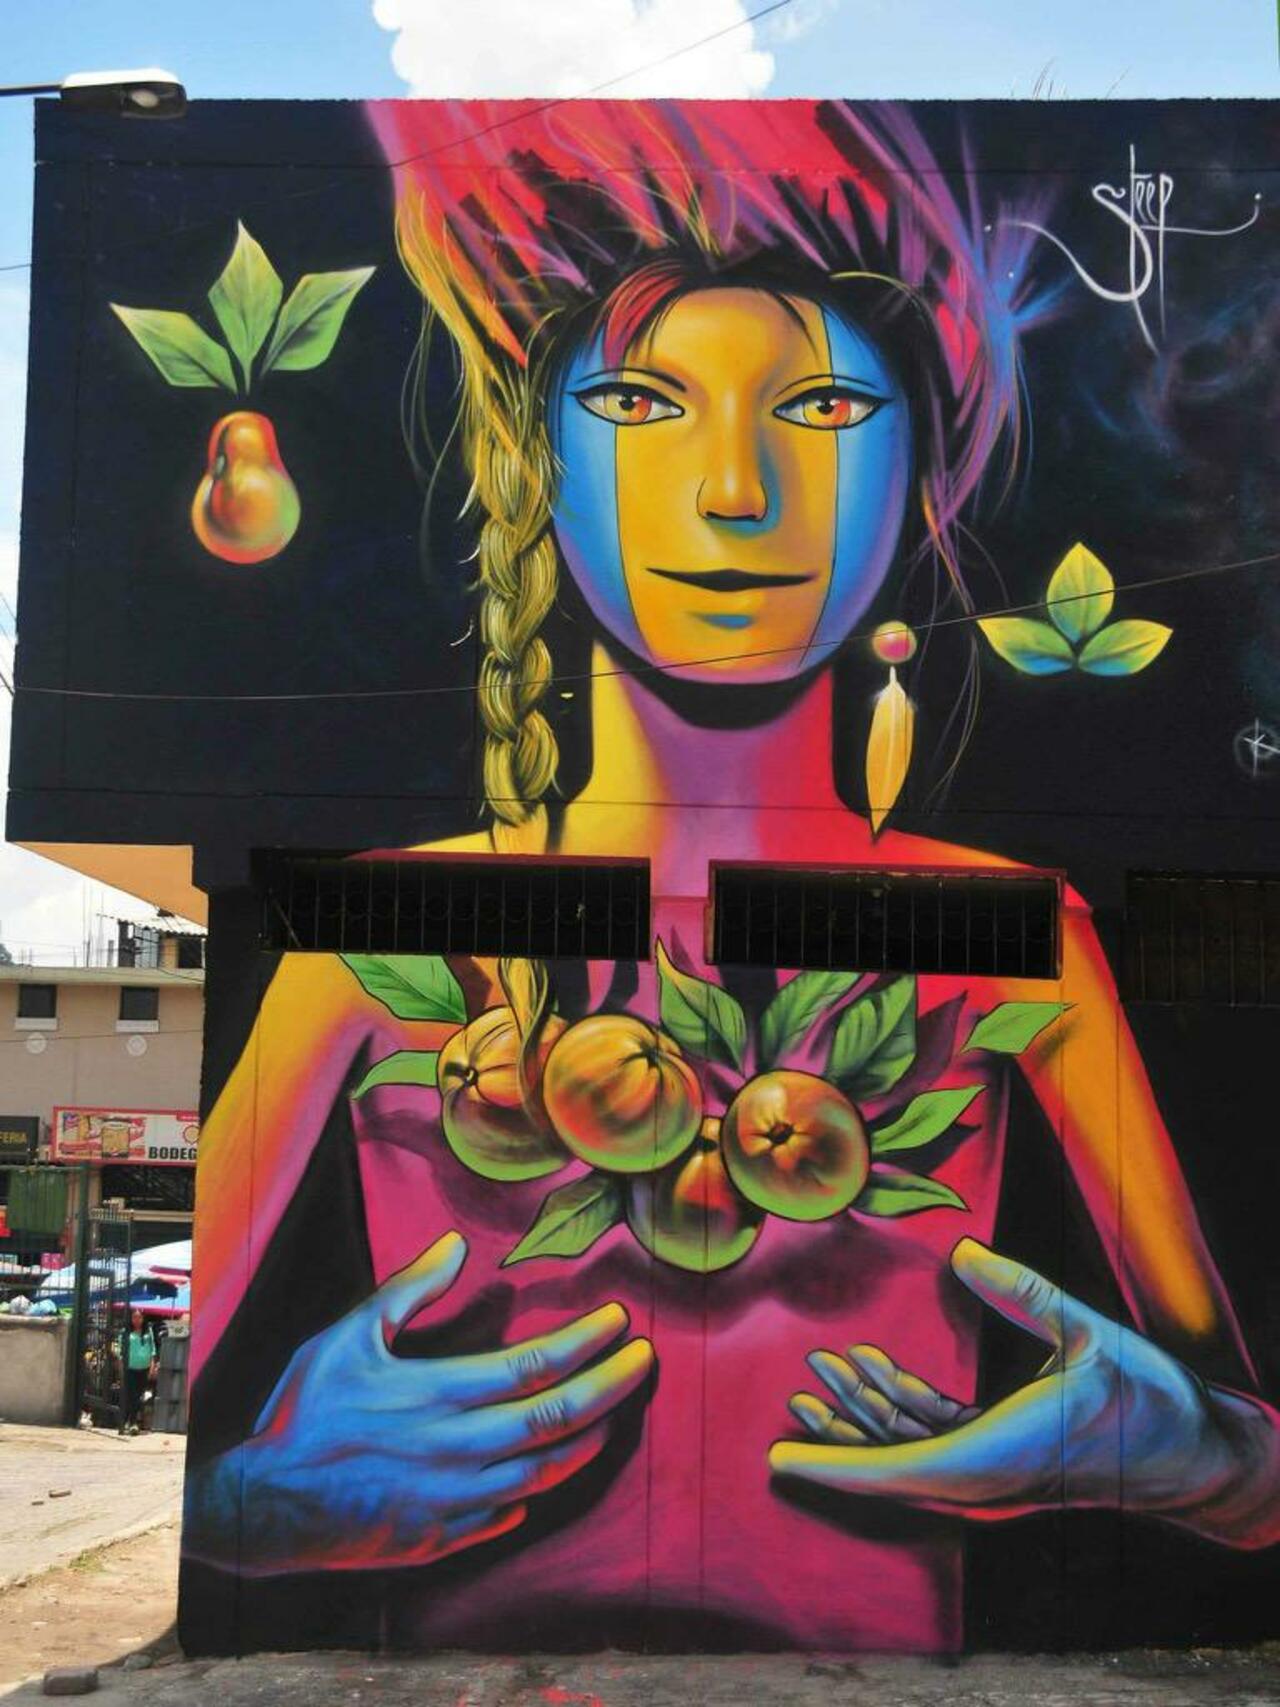 Street Art by Steep #art #graffiti #mural #streetart http://t.co/dKGIfl0HiR http://twitter.com/GoogleStreetArt/status/652717552435638272/photo/1/large?utm_source=fb&utm_medium=fb&utm_campaign=charlesjackso14&utm_content=652720469402103808 … … … … http://twitter.com/GoogleStreetArt/status/652717552435638272/photo/1/large?utm_source=fb&utm_medium=fb&utm_campaign=charlesjackso14&utm_content=652732466730520576